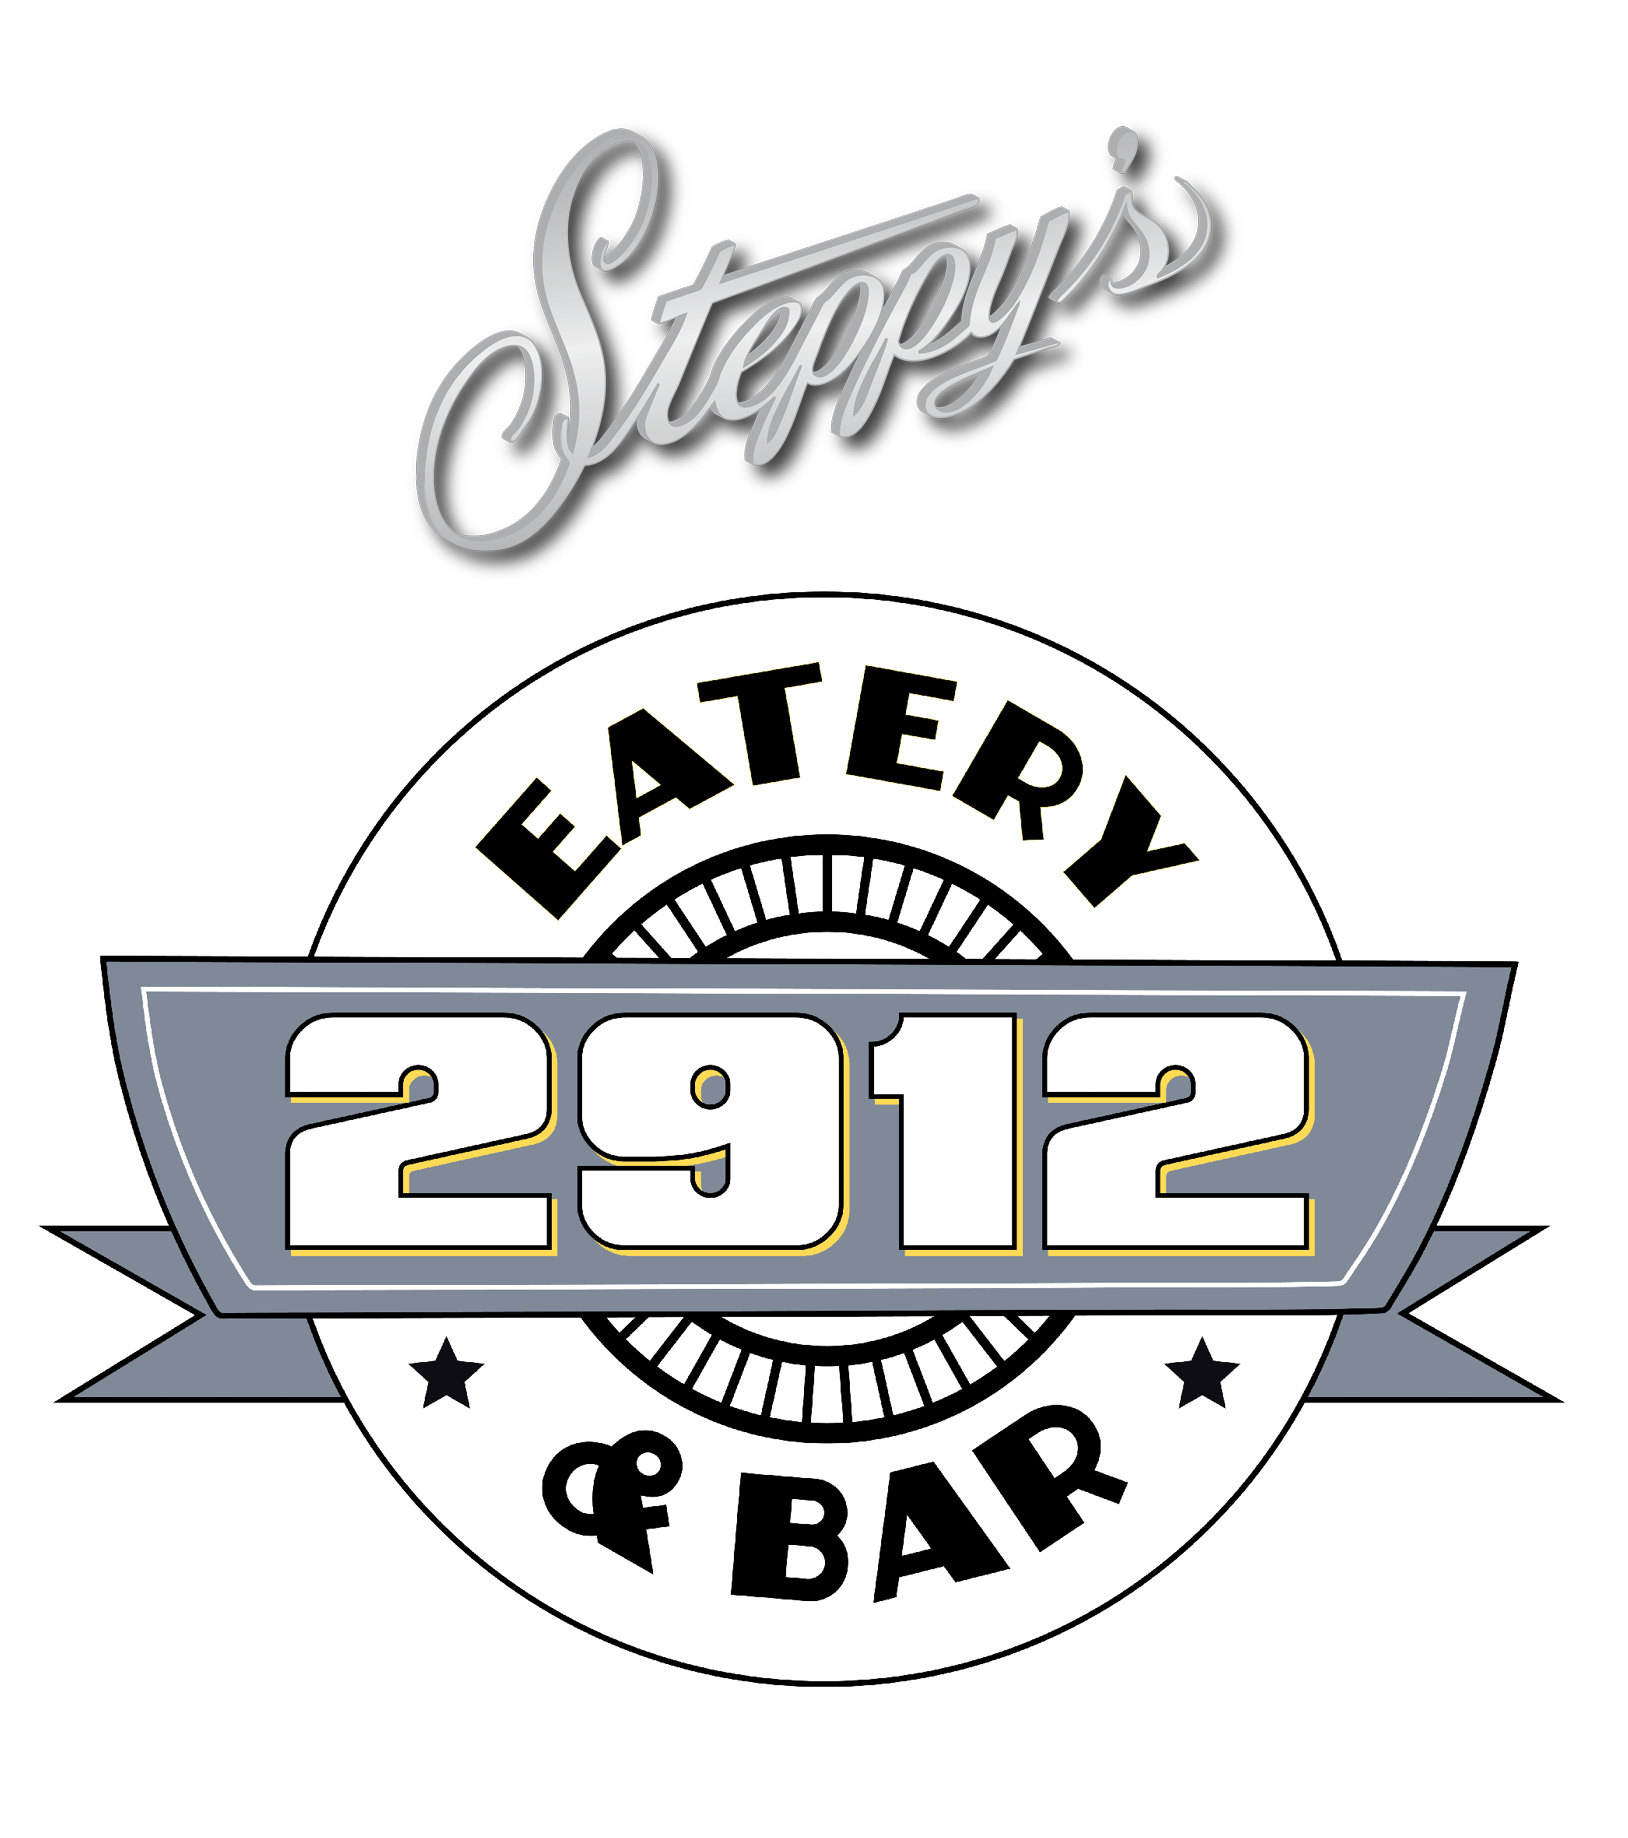 Steppys-logo.png